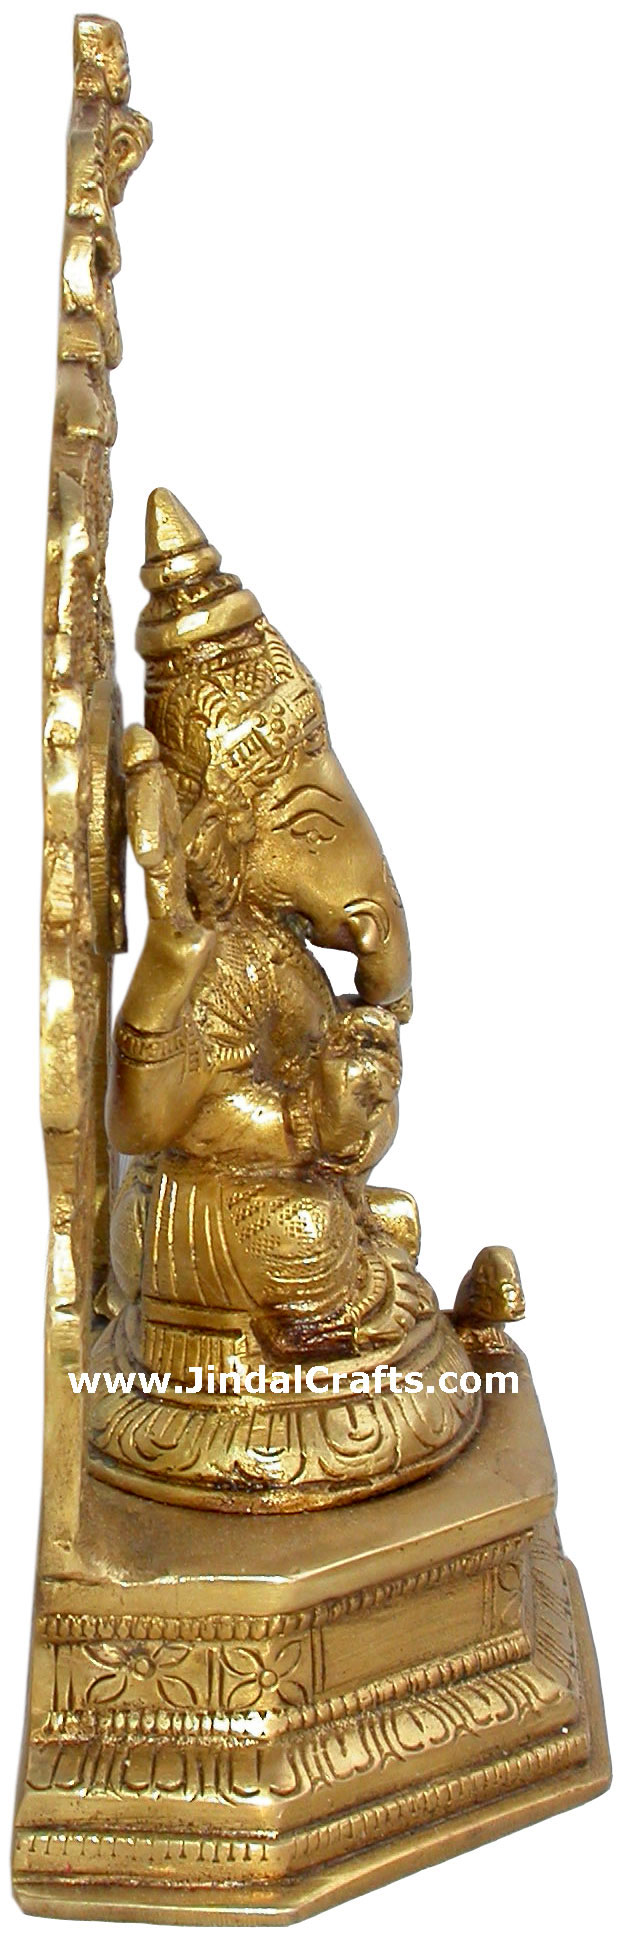 Lord Ganesh Statue Hindu Religious Artifact Statues Art